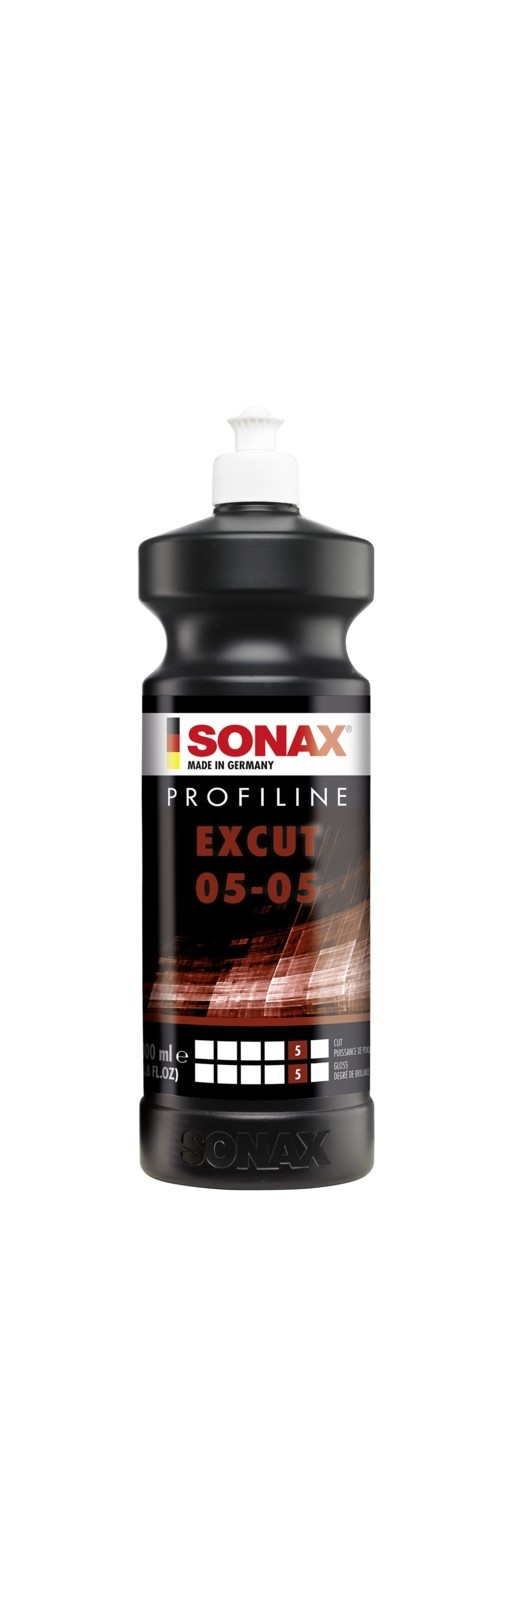 SONAX Lackpolitur PROFILINE ExCut 05-05 Ø 8,4 mm 1 L (02453000)